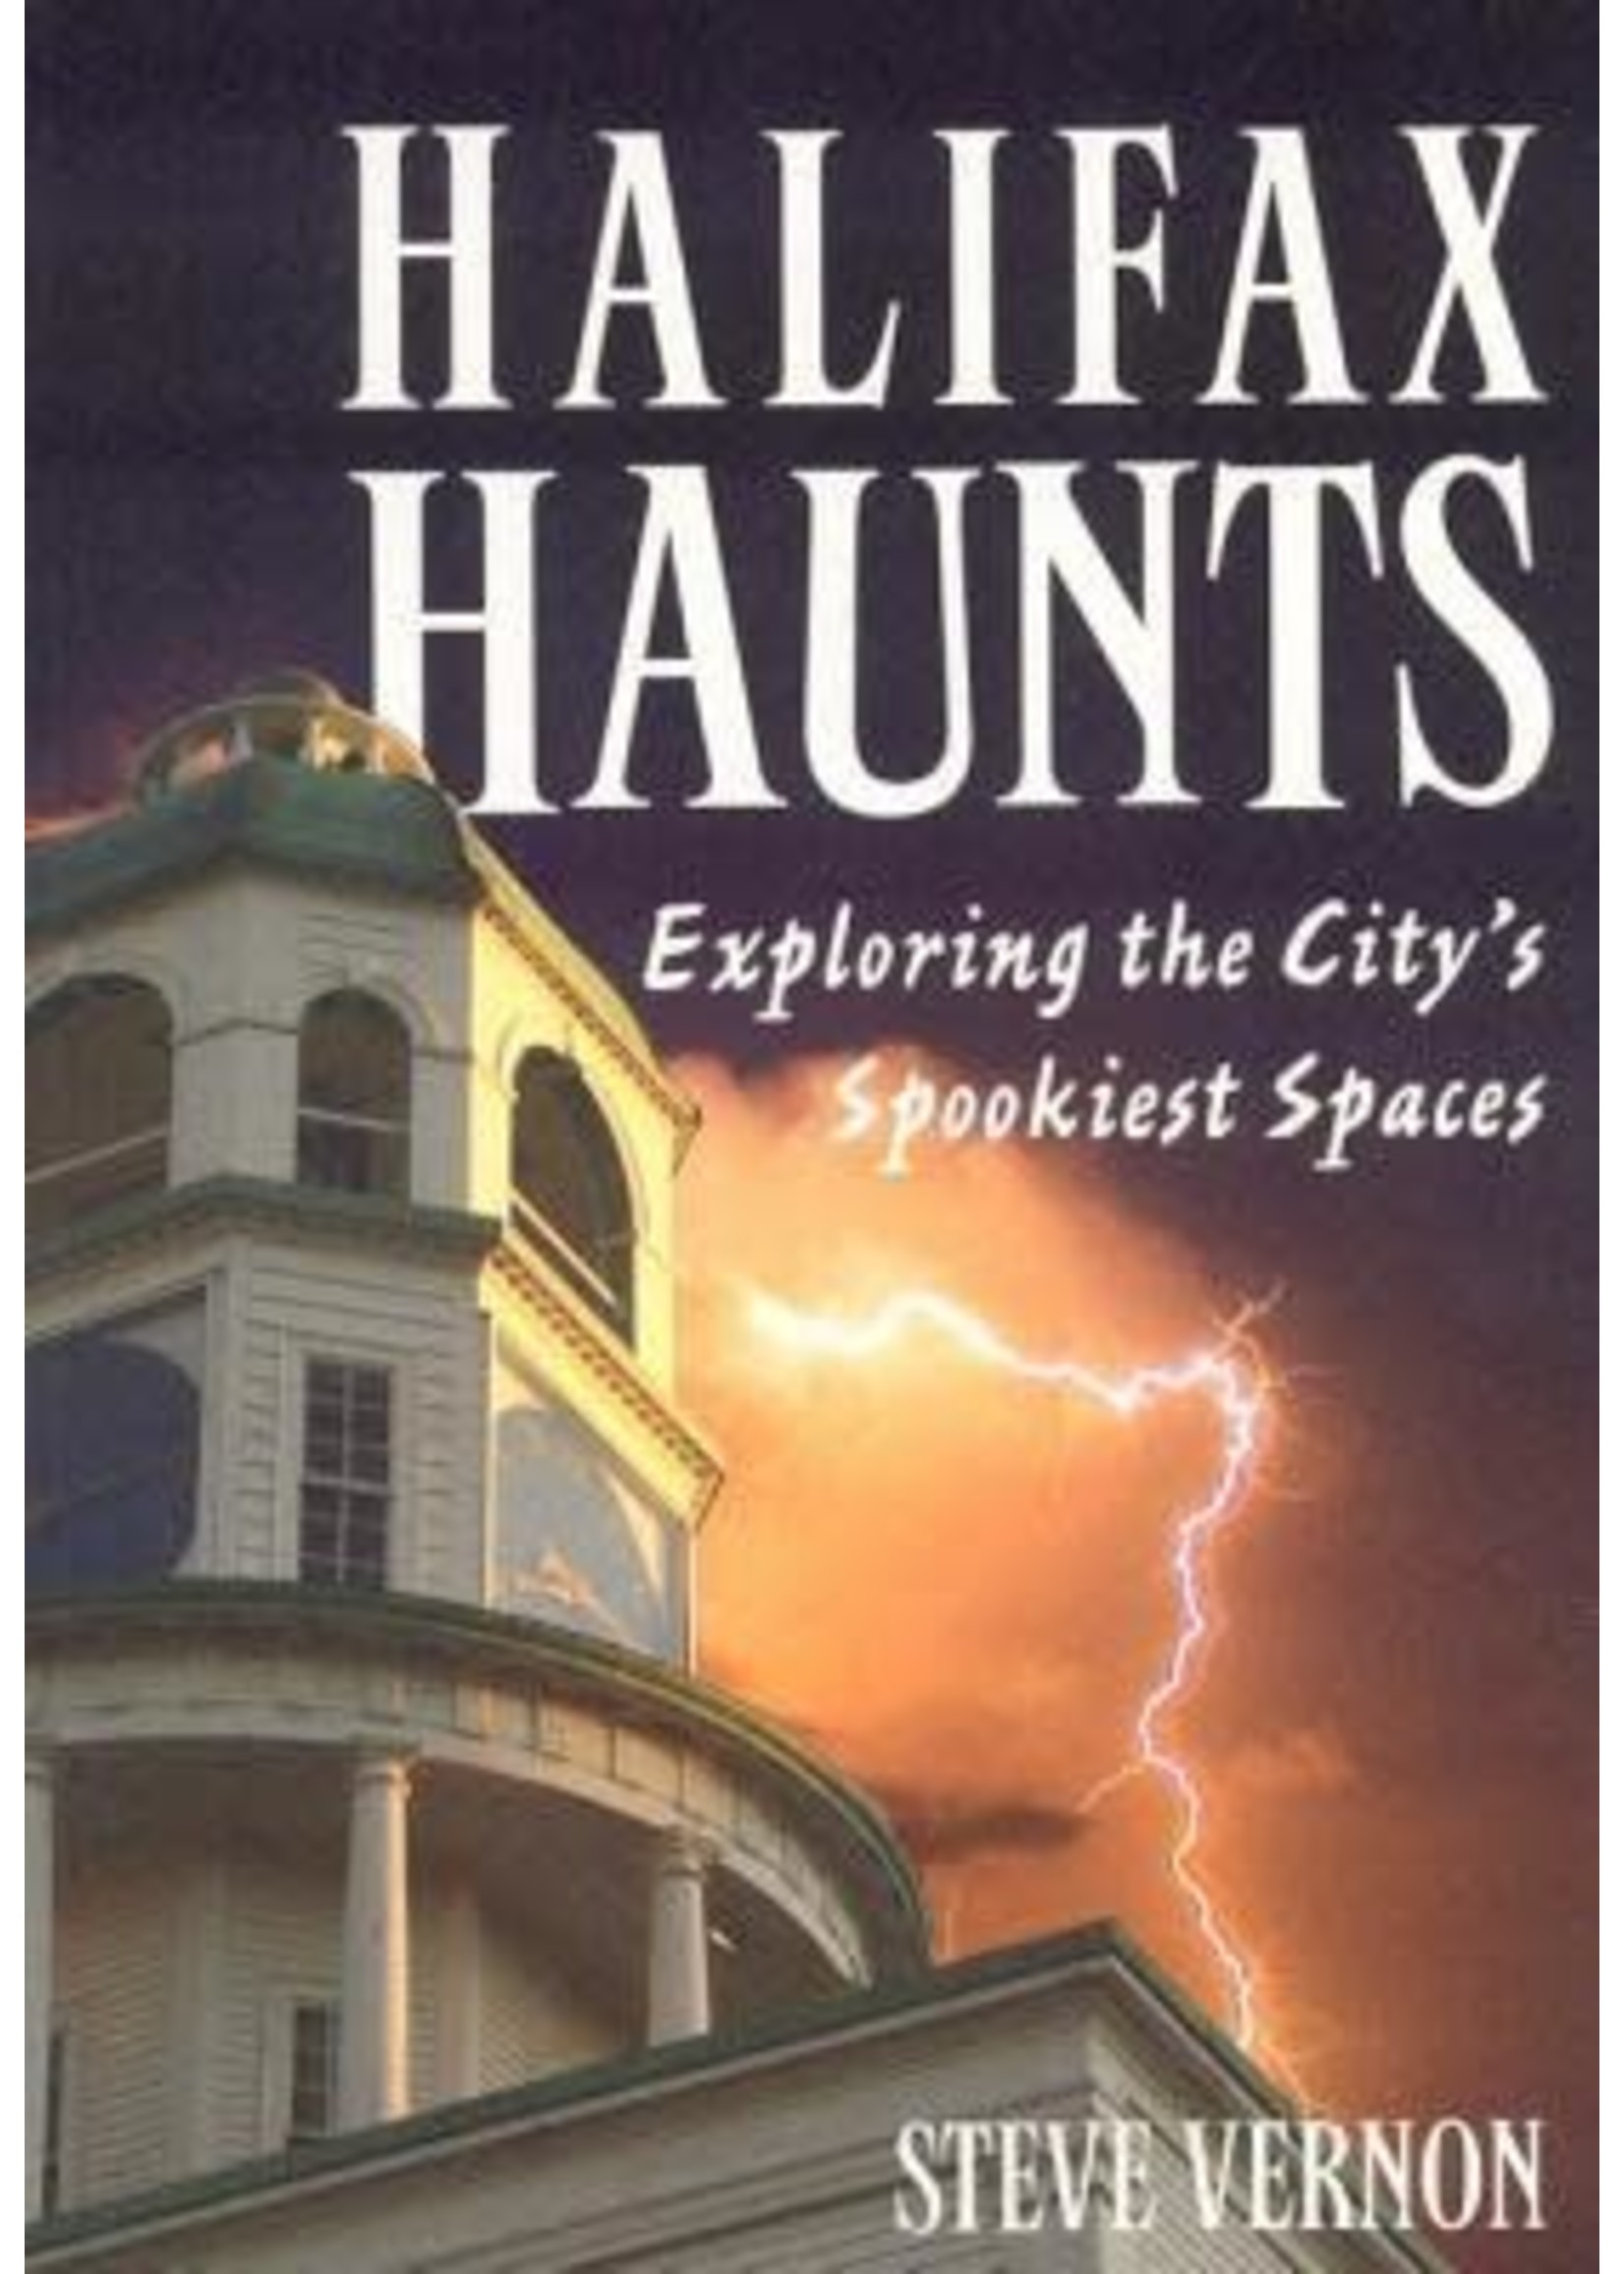 Halifax Haunts by Steve Vernon